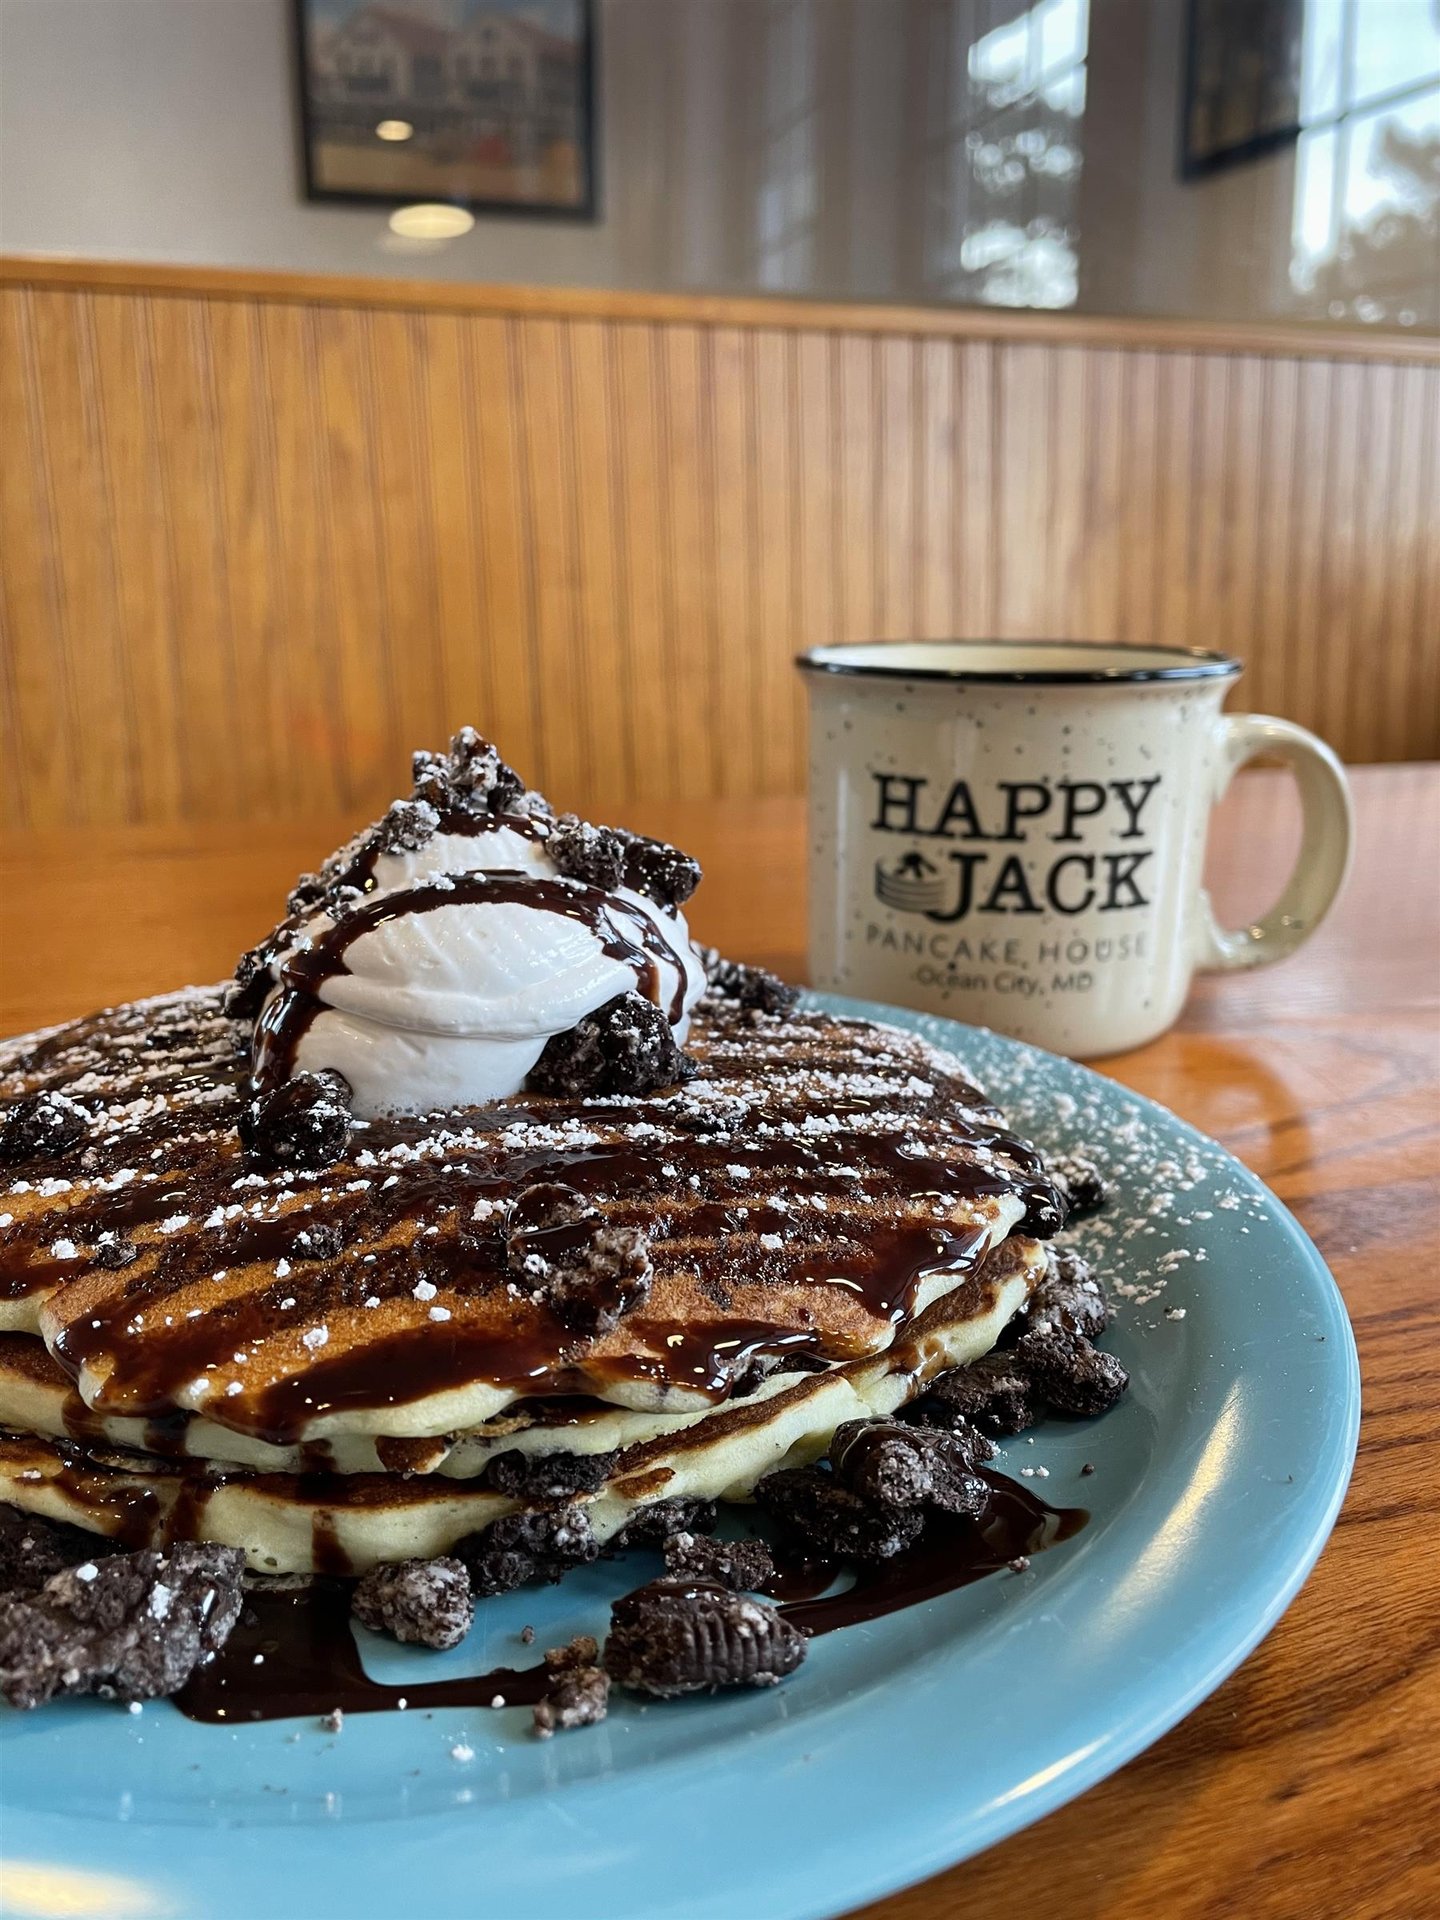 Happy Jack Pancake House - Restaurant in Ocean City, MD